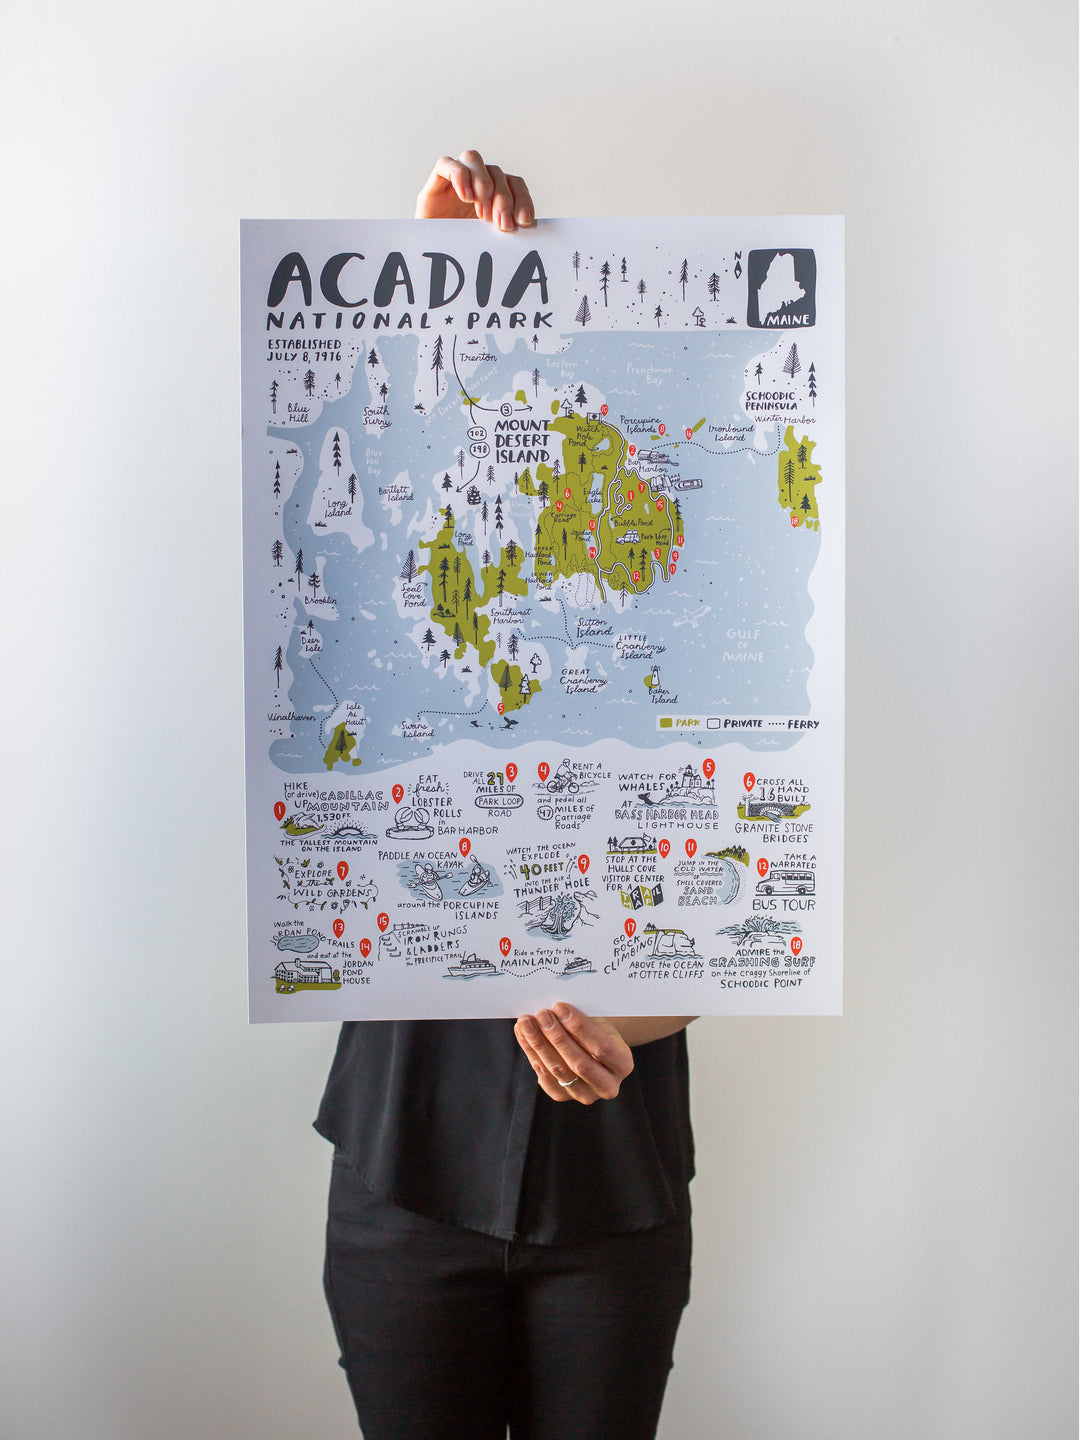 Acadia National Park Print by Brainstorm